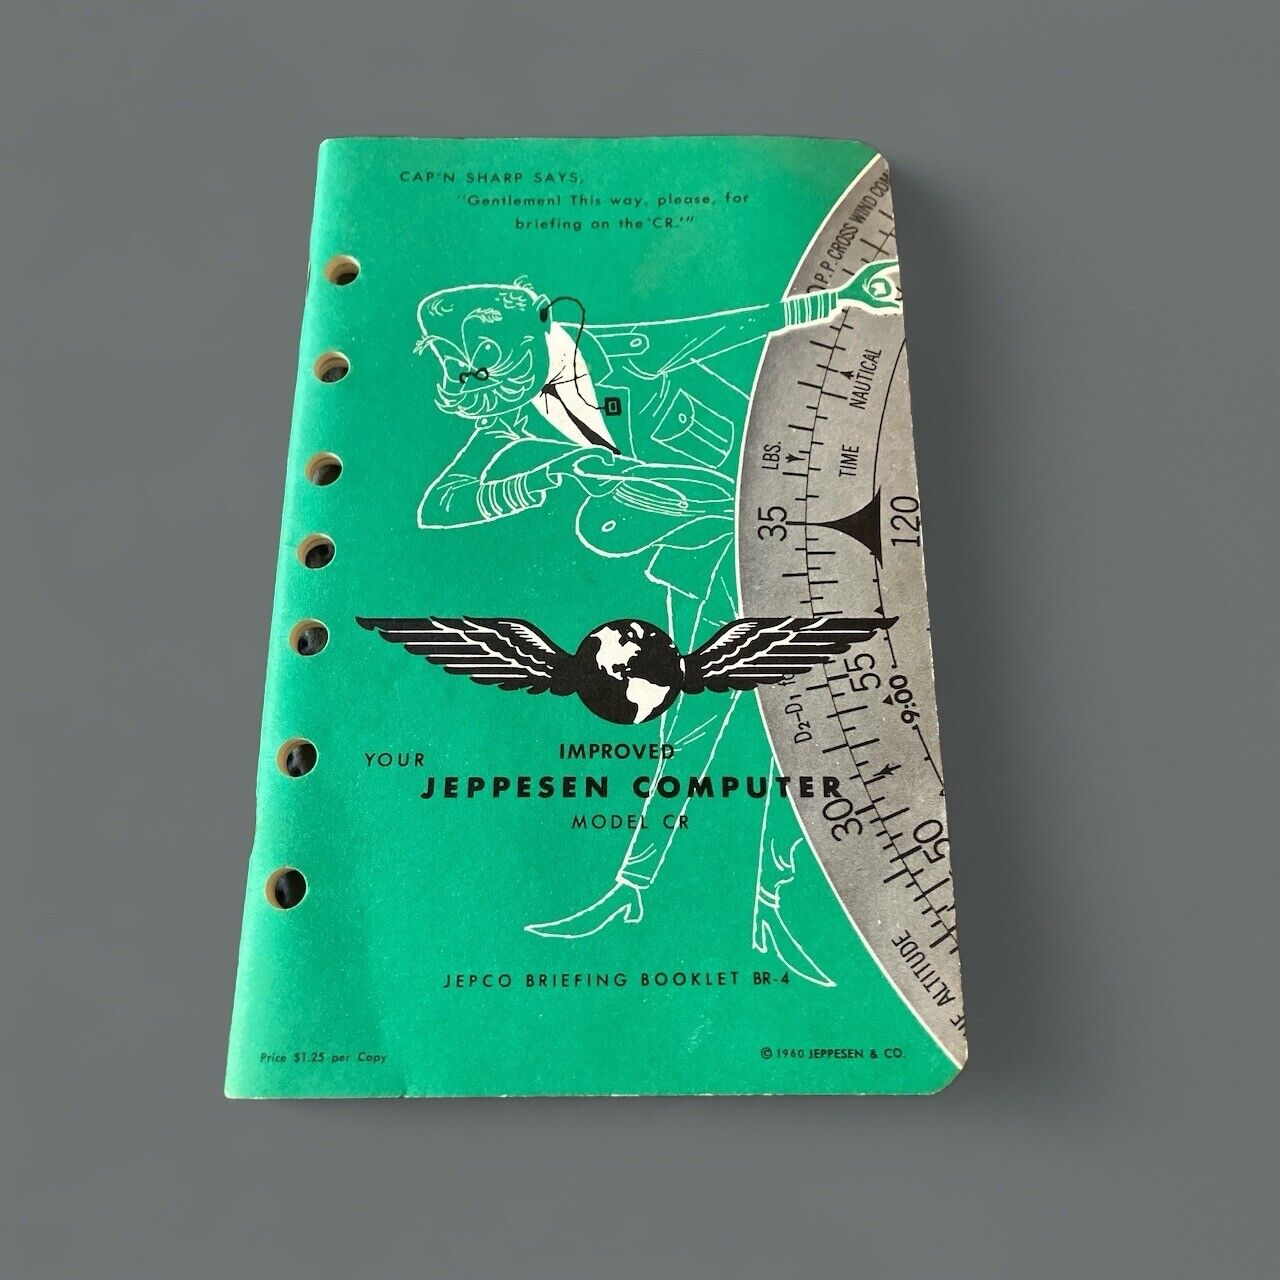 Jeppesen Computer Model CR Booklet - Vintage 1960 Airplane Pilot Aviation Book